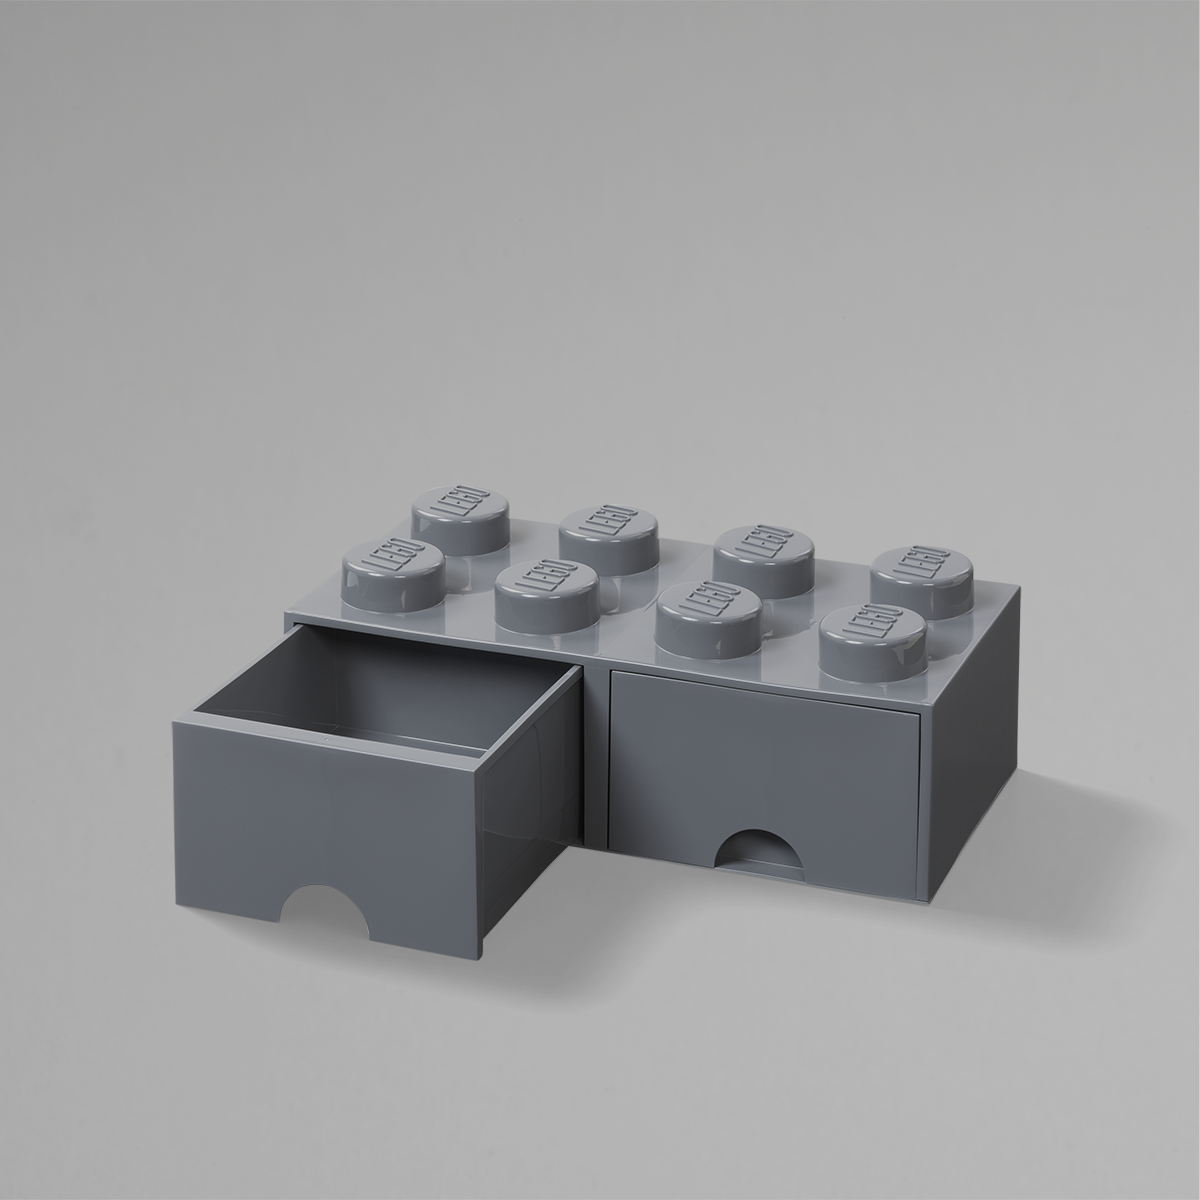  Room Copenhagen, LEGO Brick Box Stackable Storage